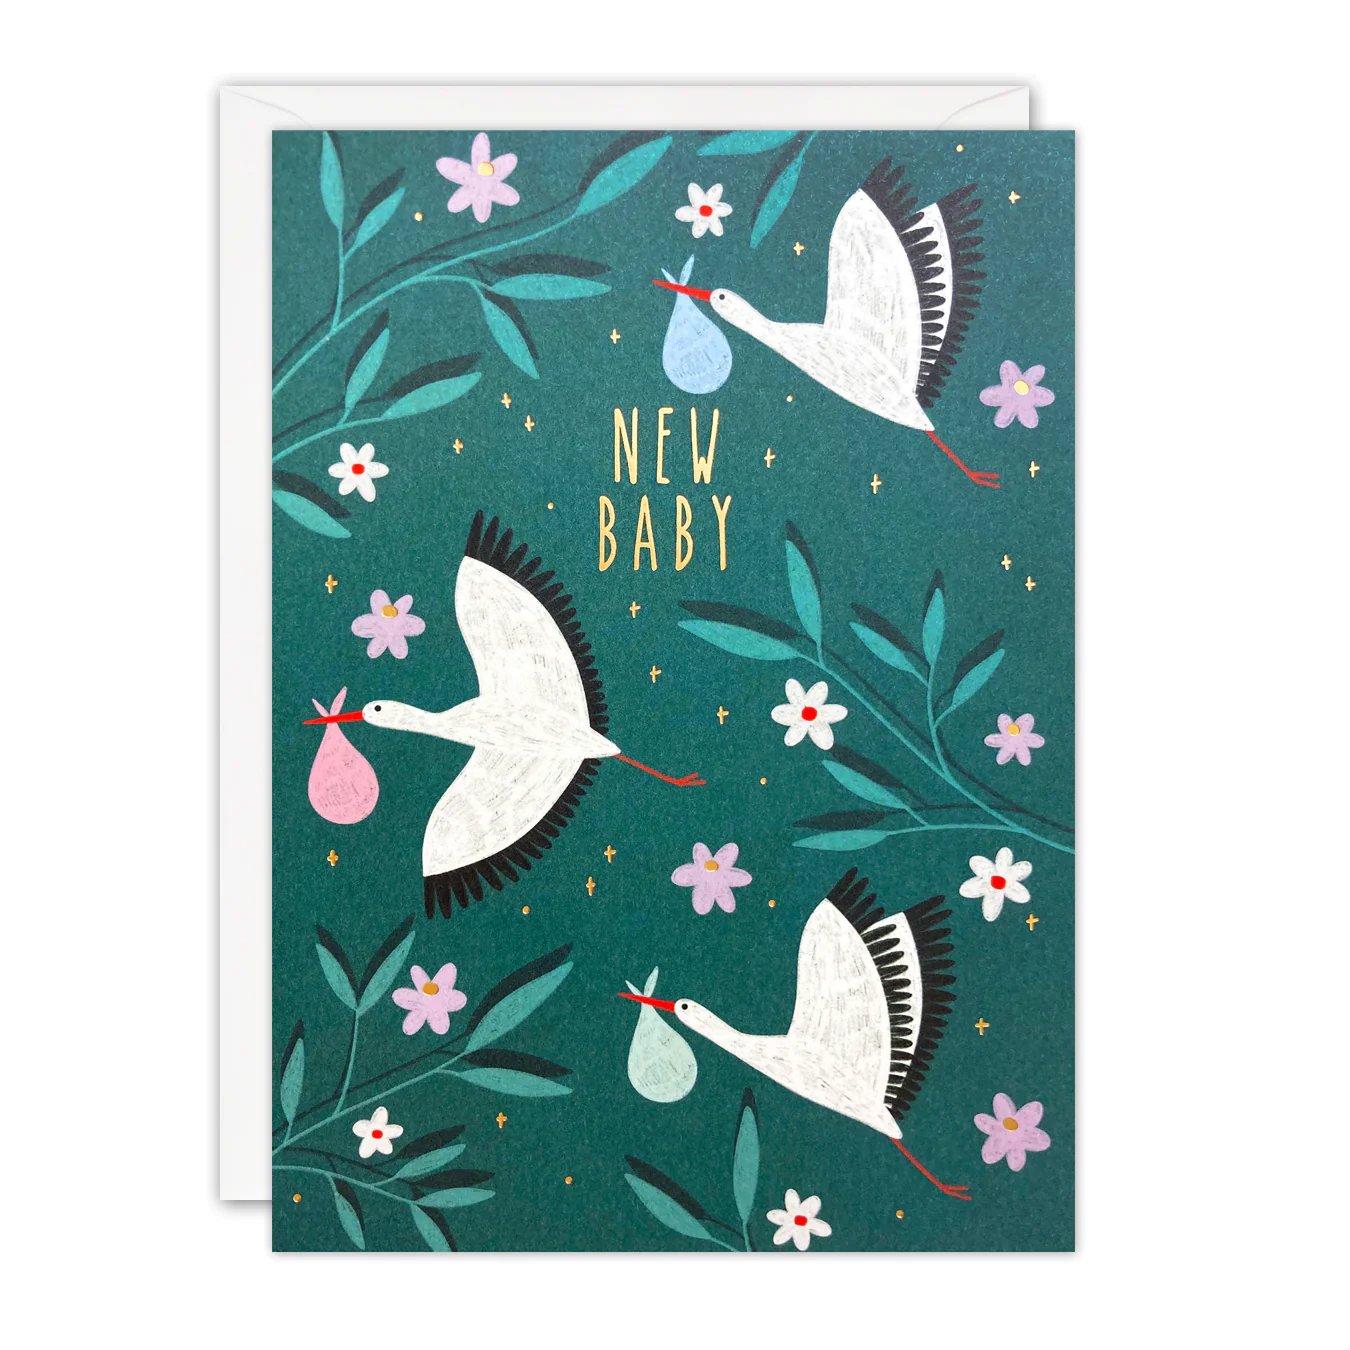 new baby storks card by James Ellis